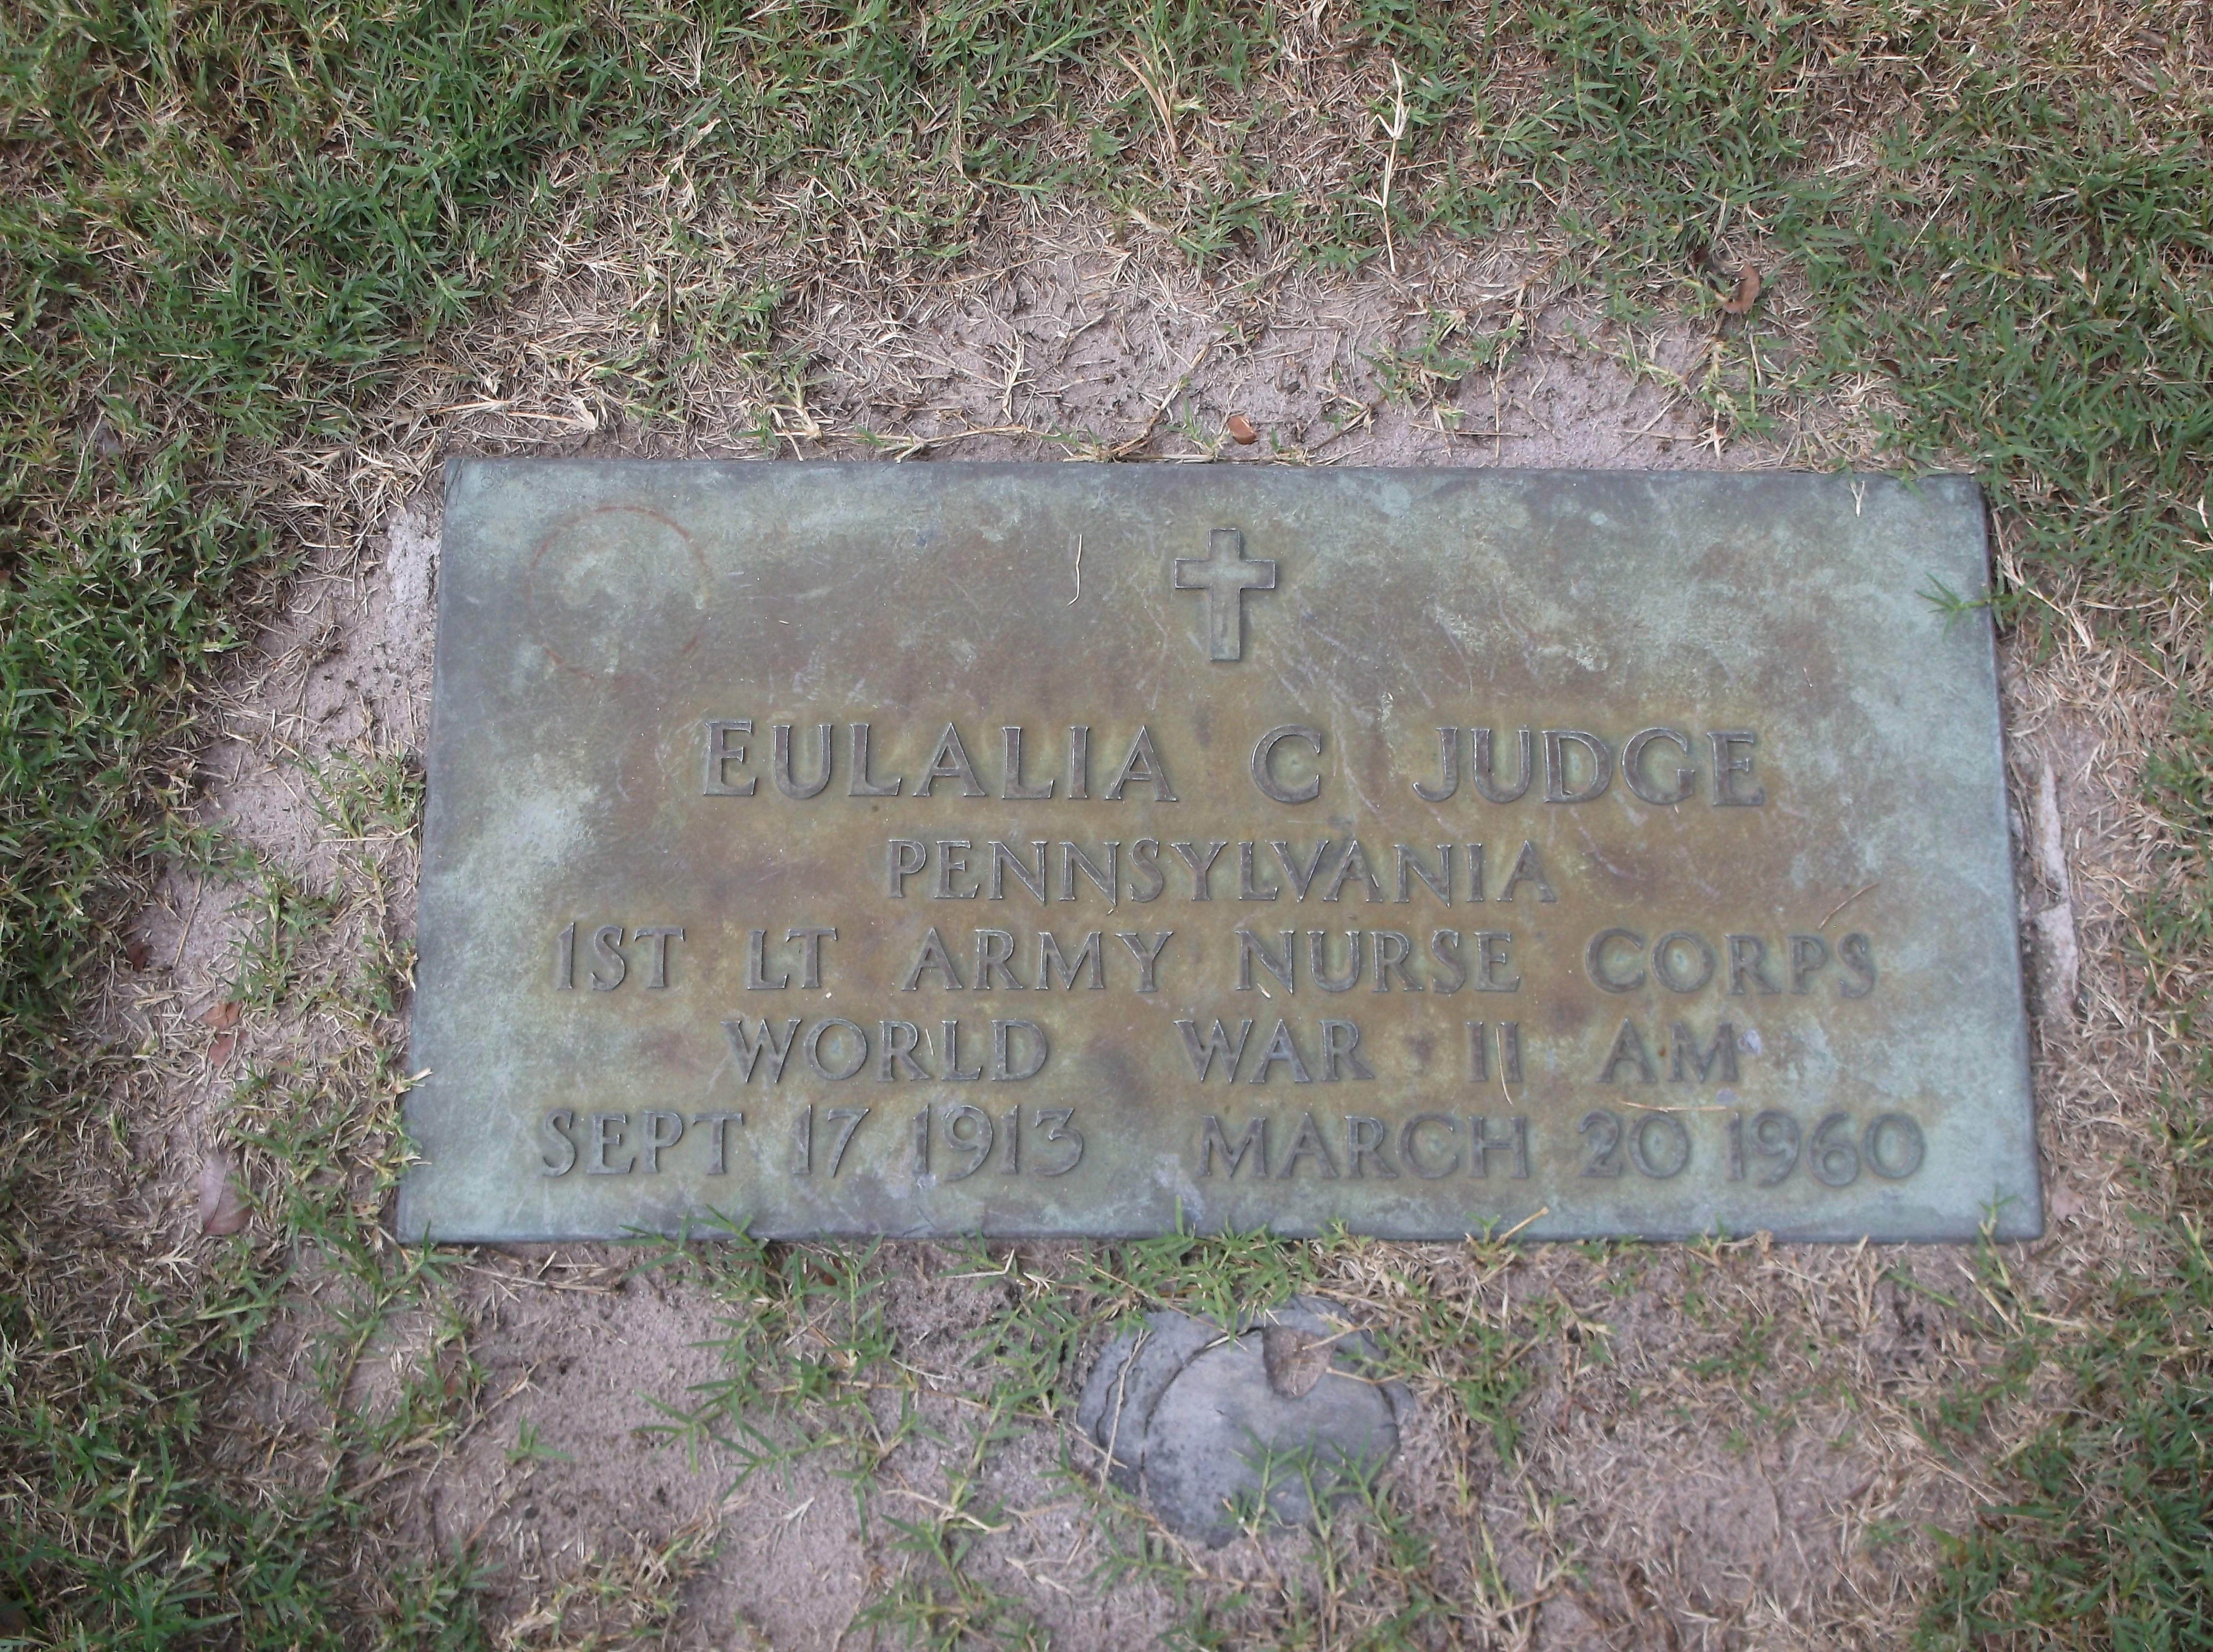 Eulalia Judge